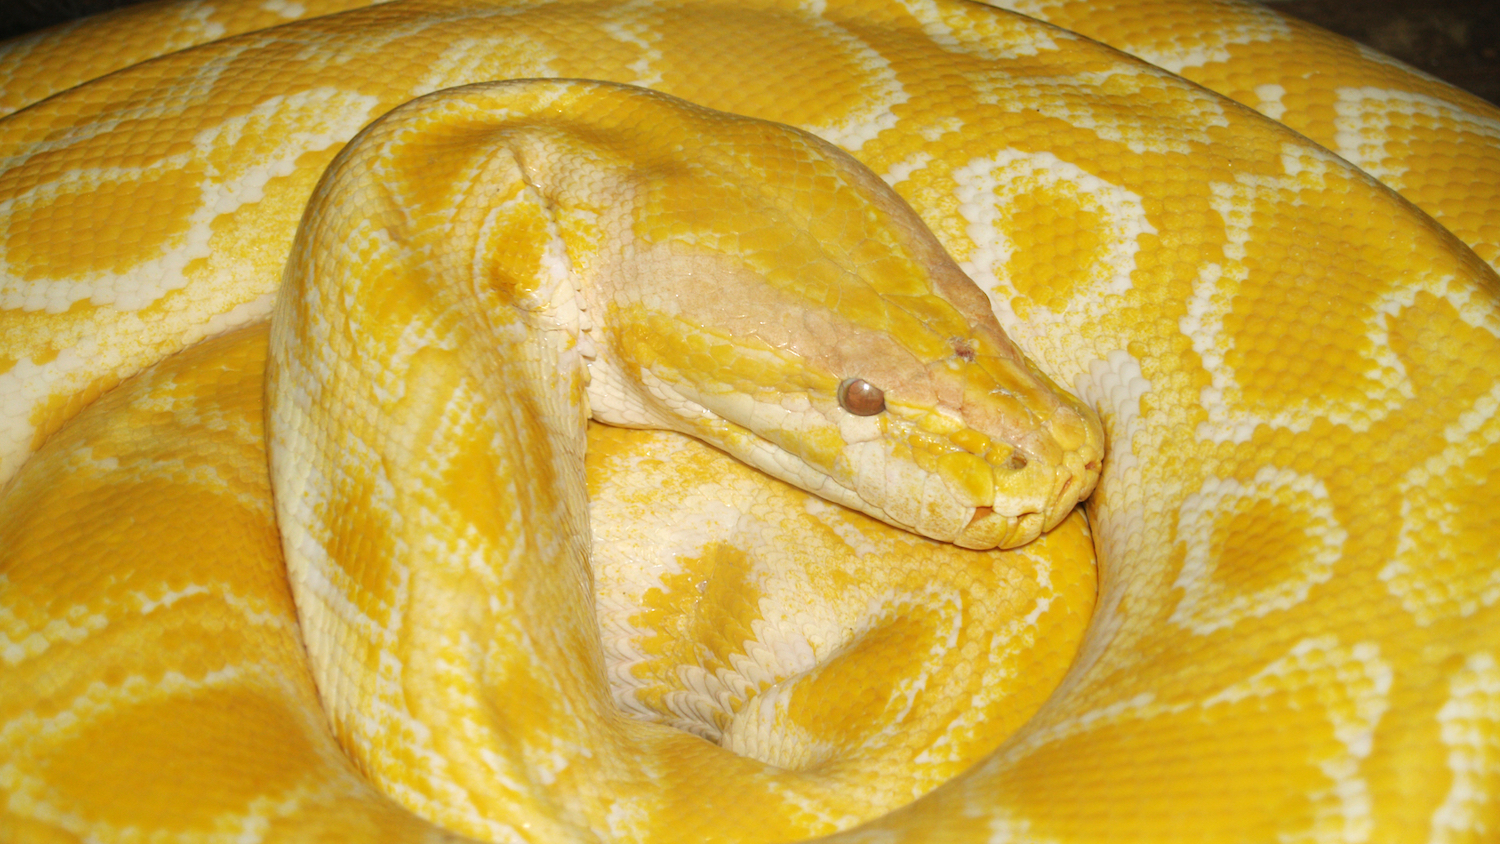 Albino Burmese python